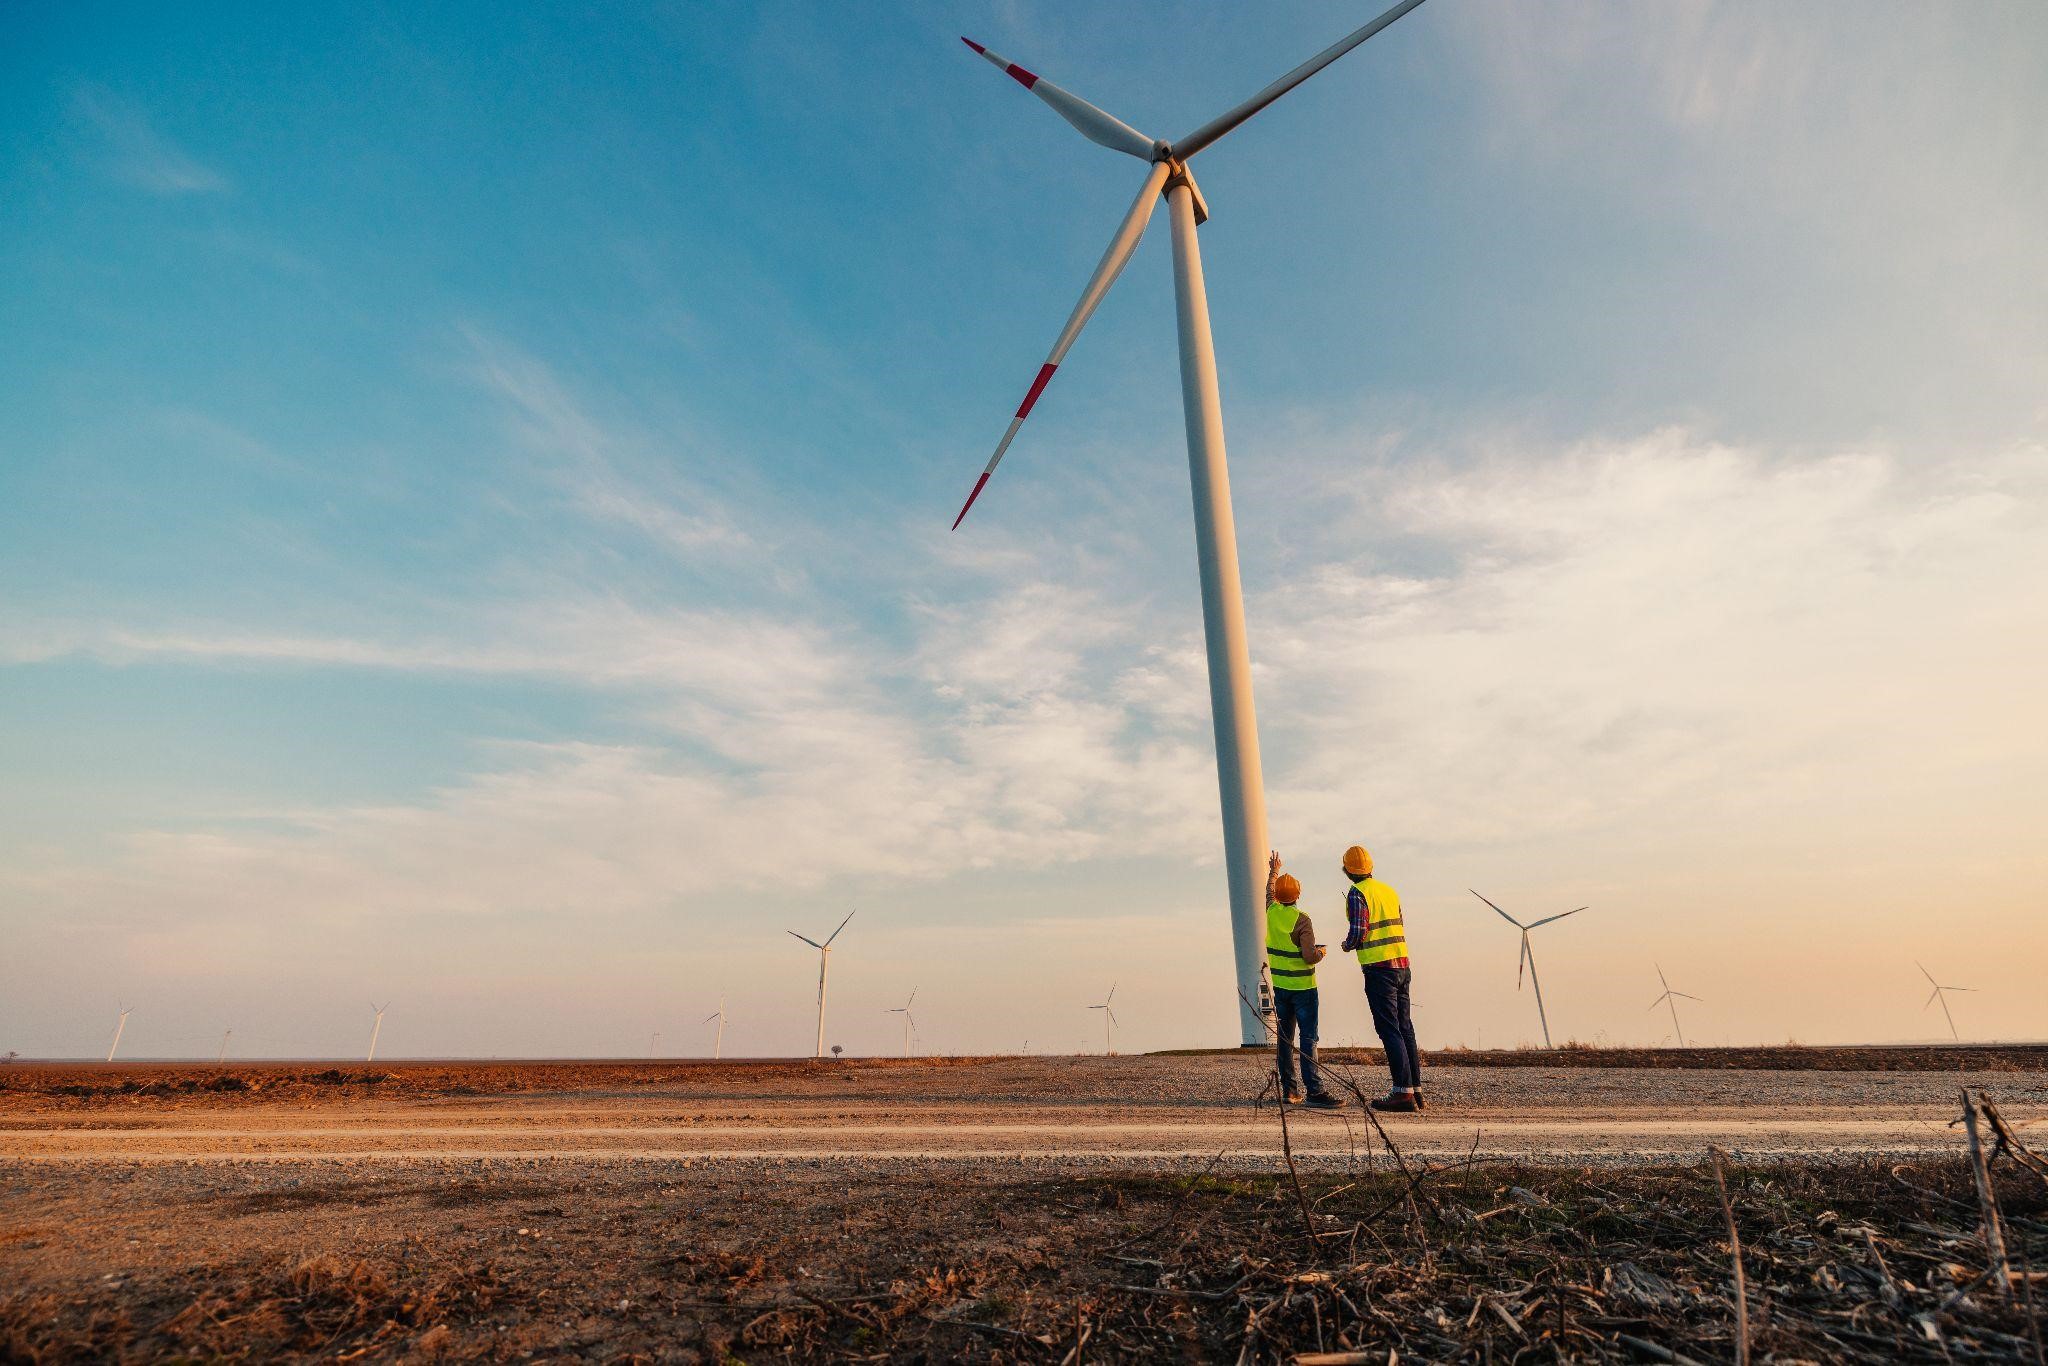 Learn about career opportunities as a wind turbine technician.